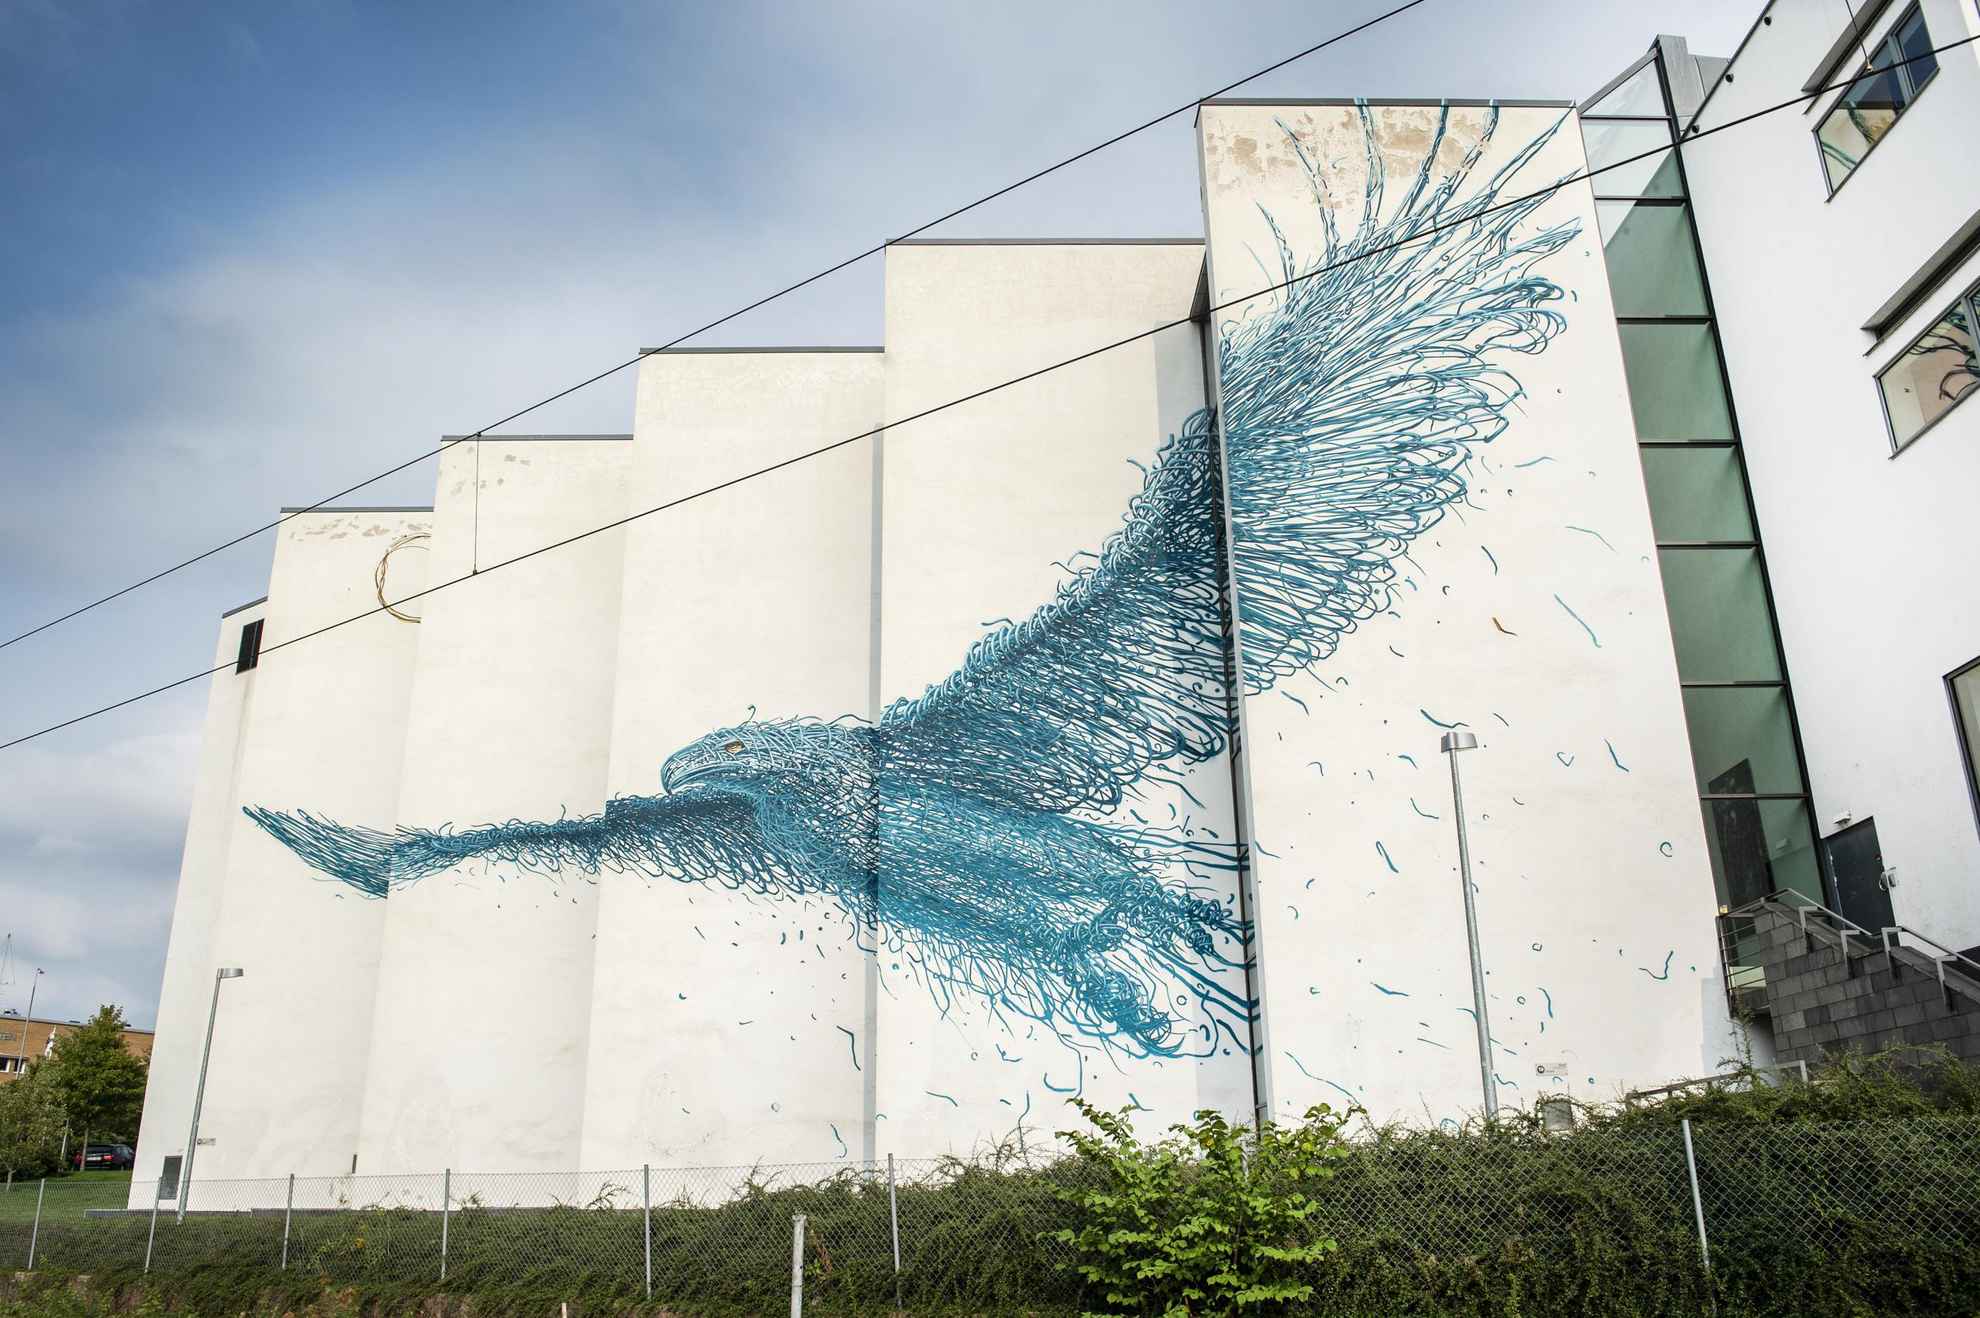 Blue eagle by DALeast for No Limit Street Art, Borås